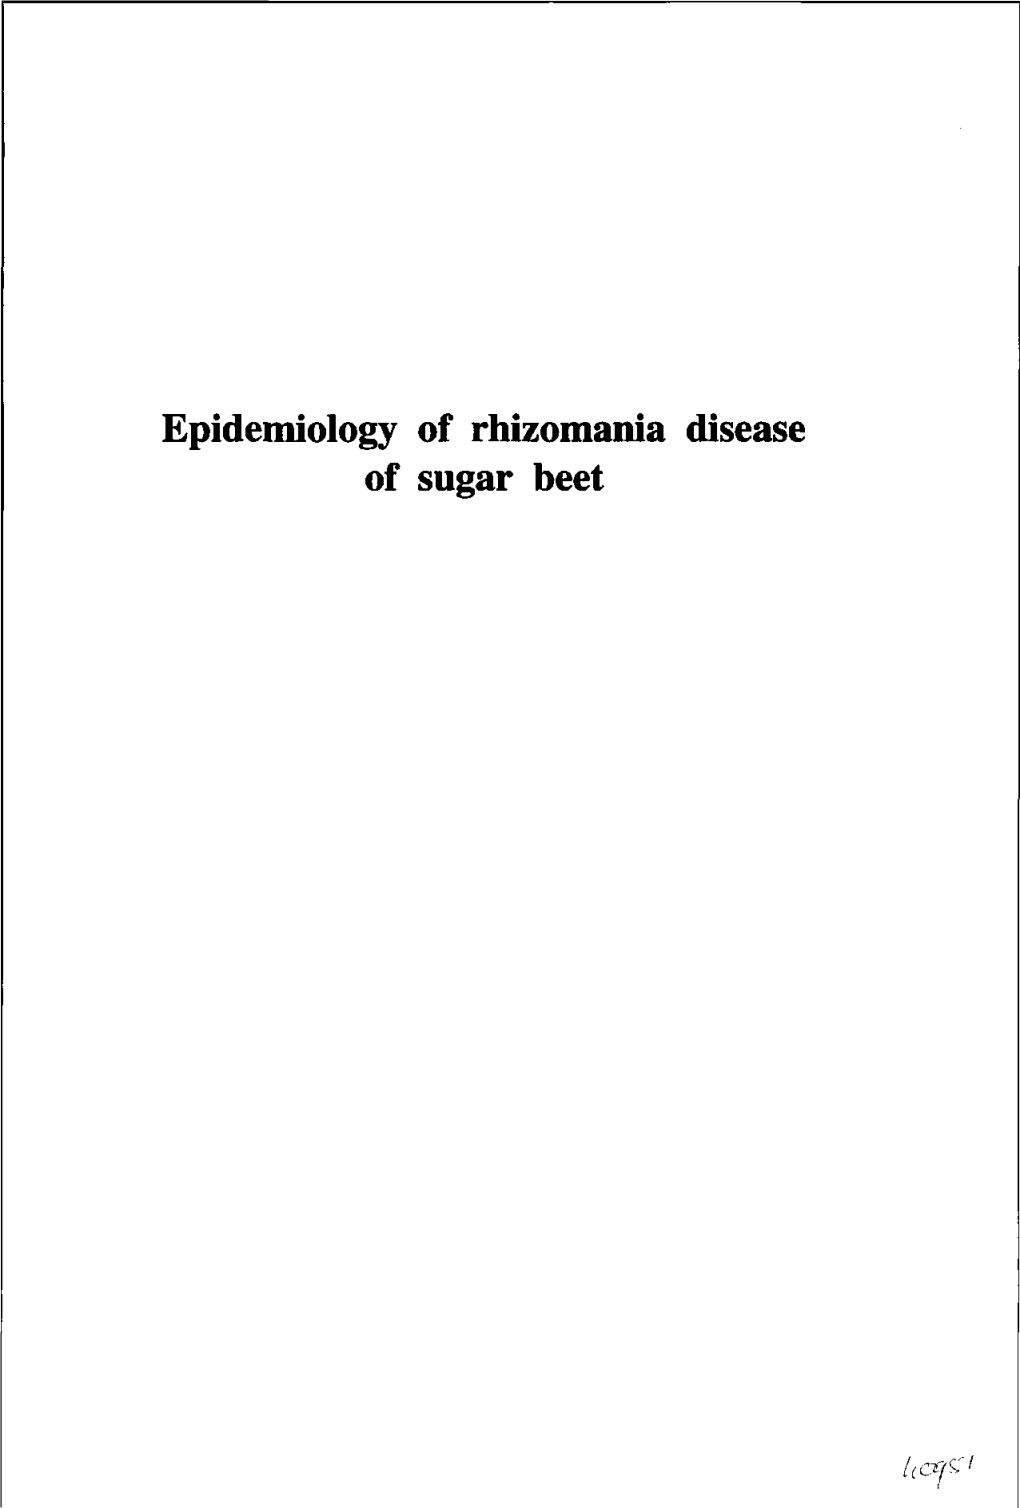 Epidemiology of Rhizomania Disease of Sugar Beet